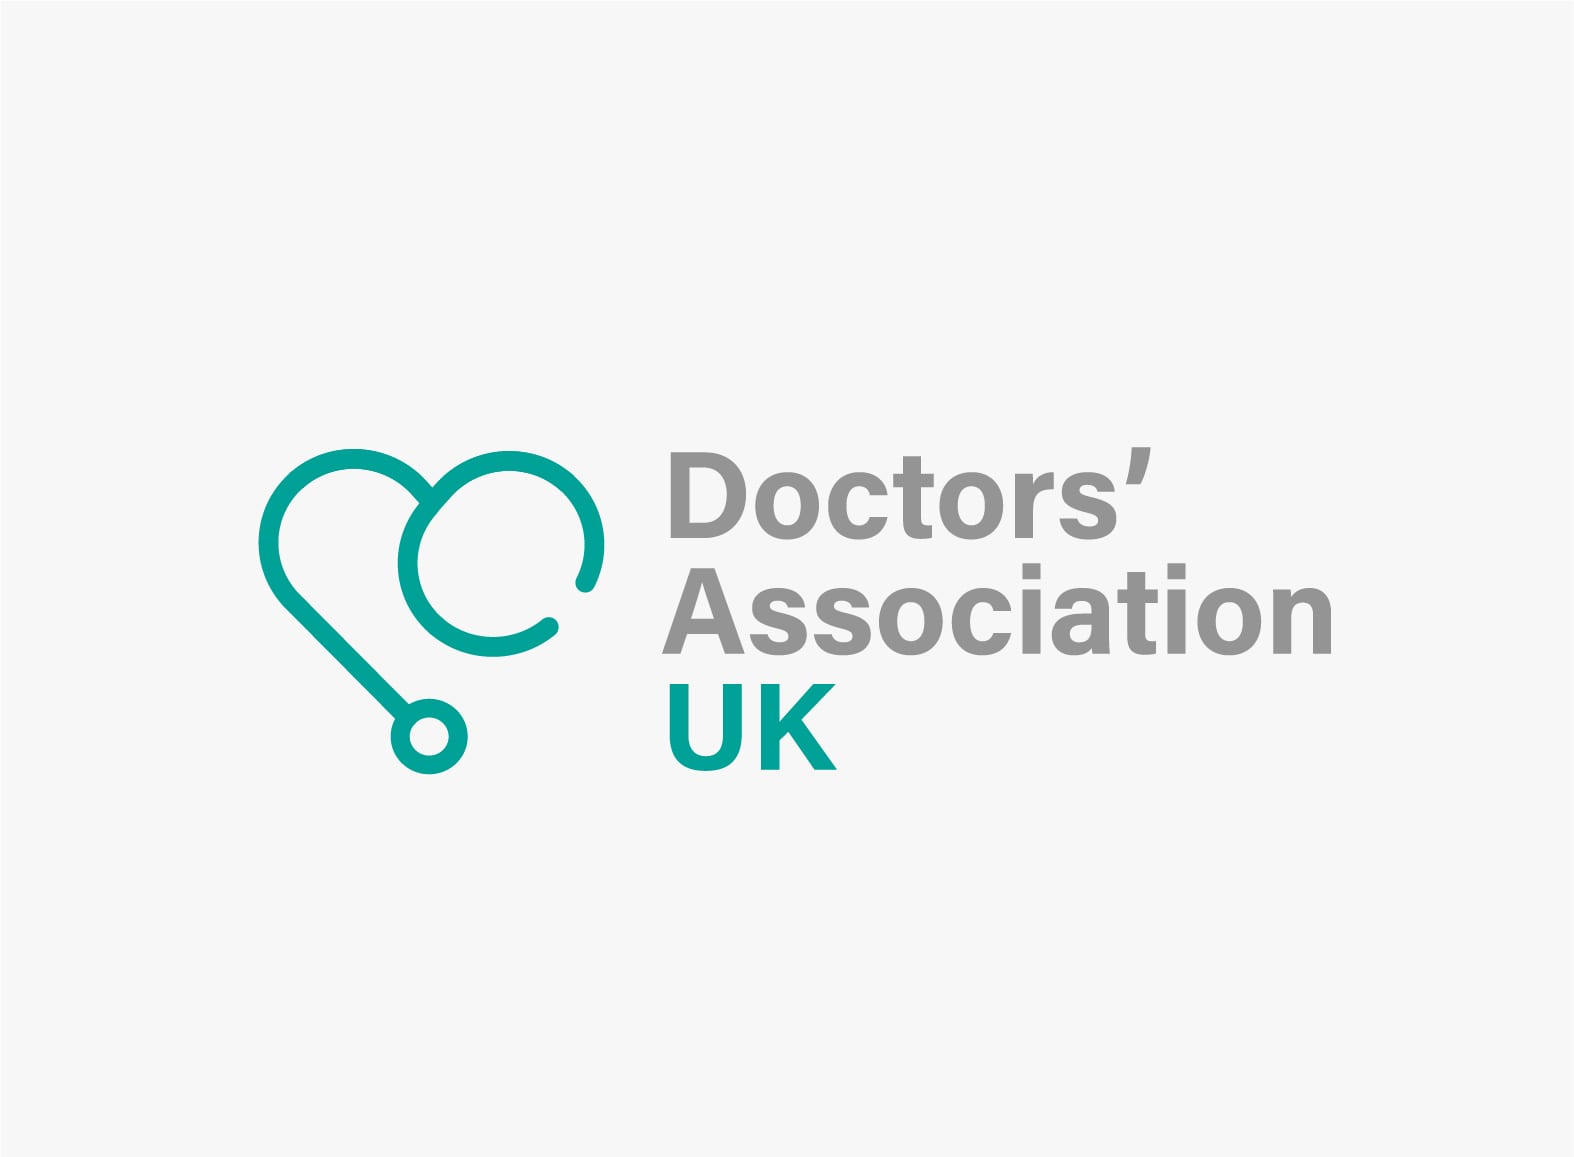 Doctors' Association UK logo